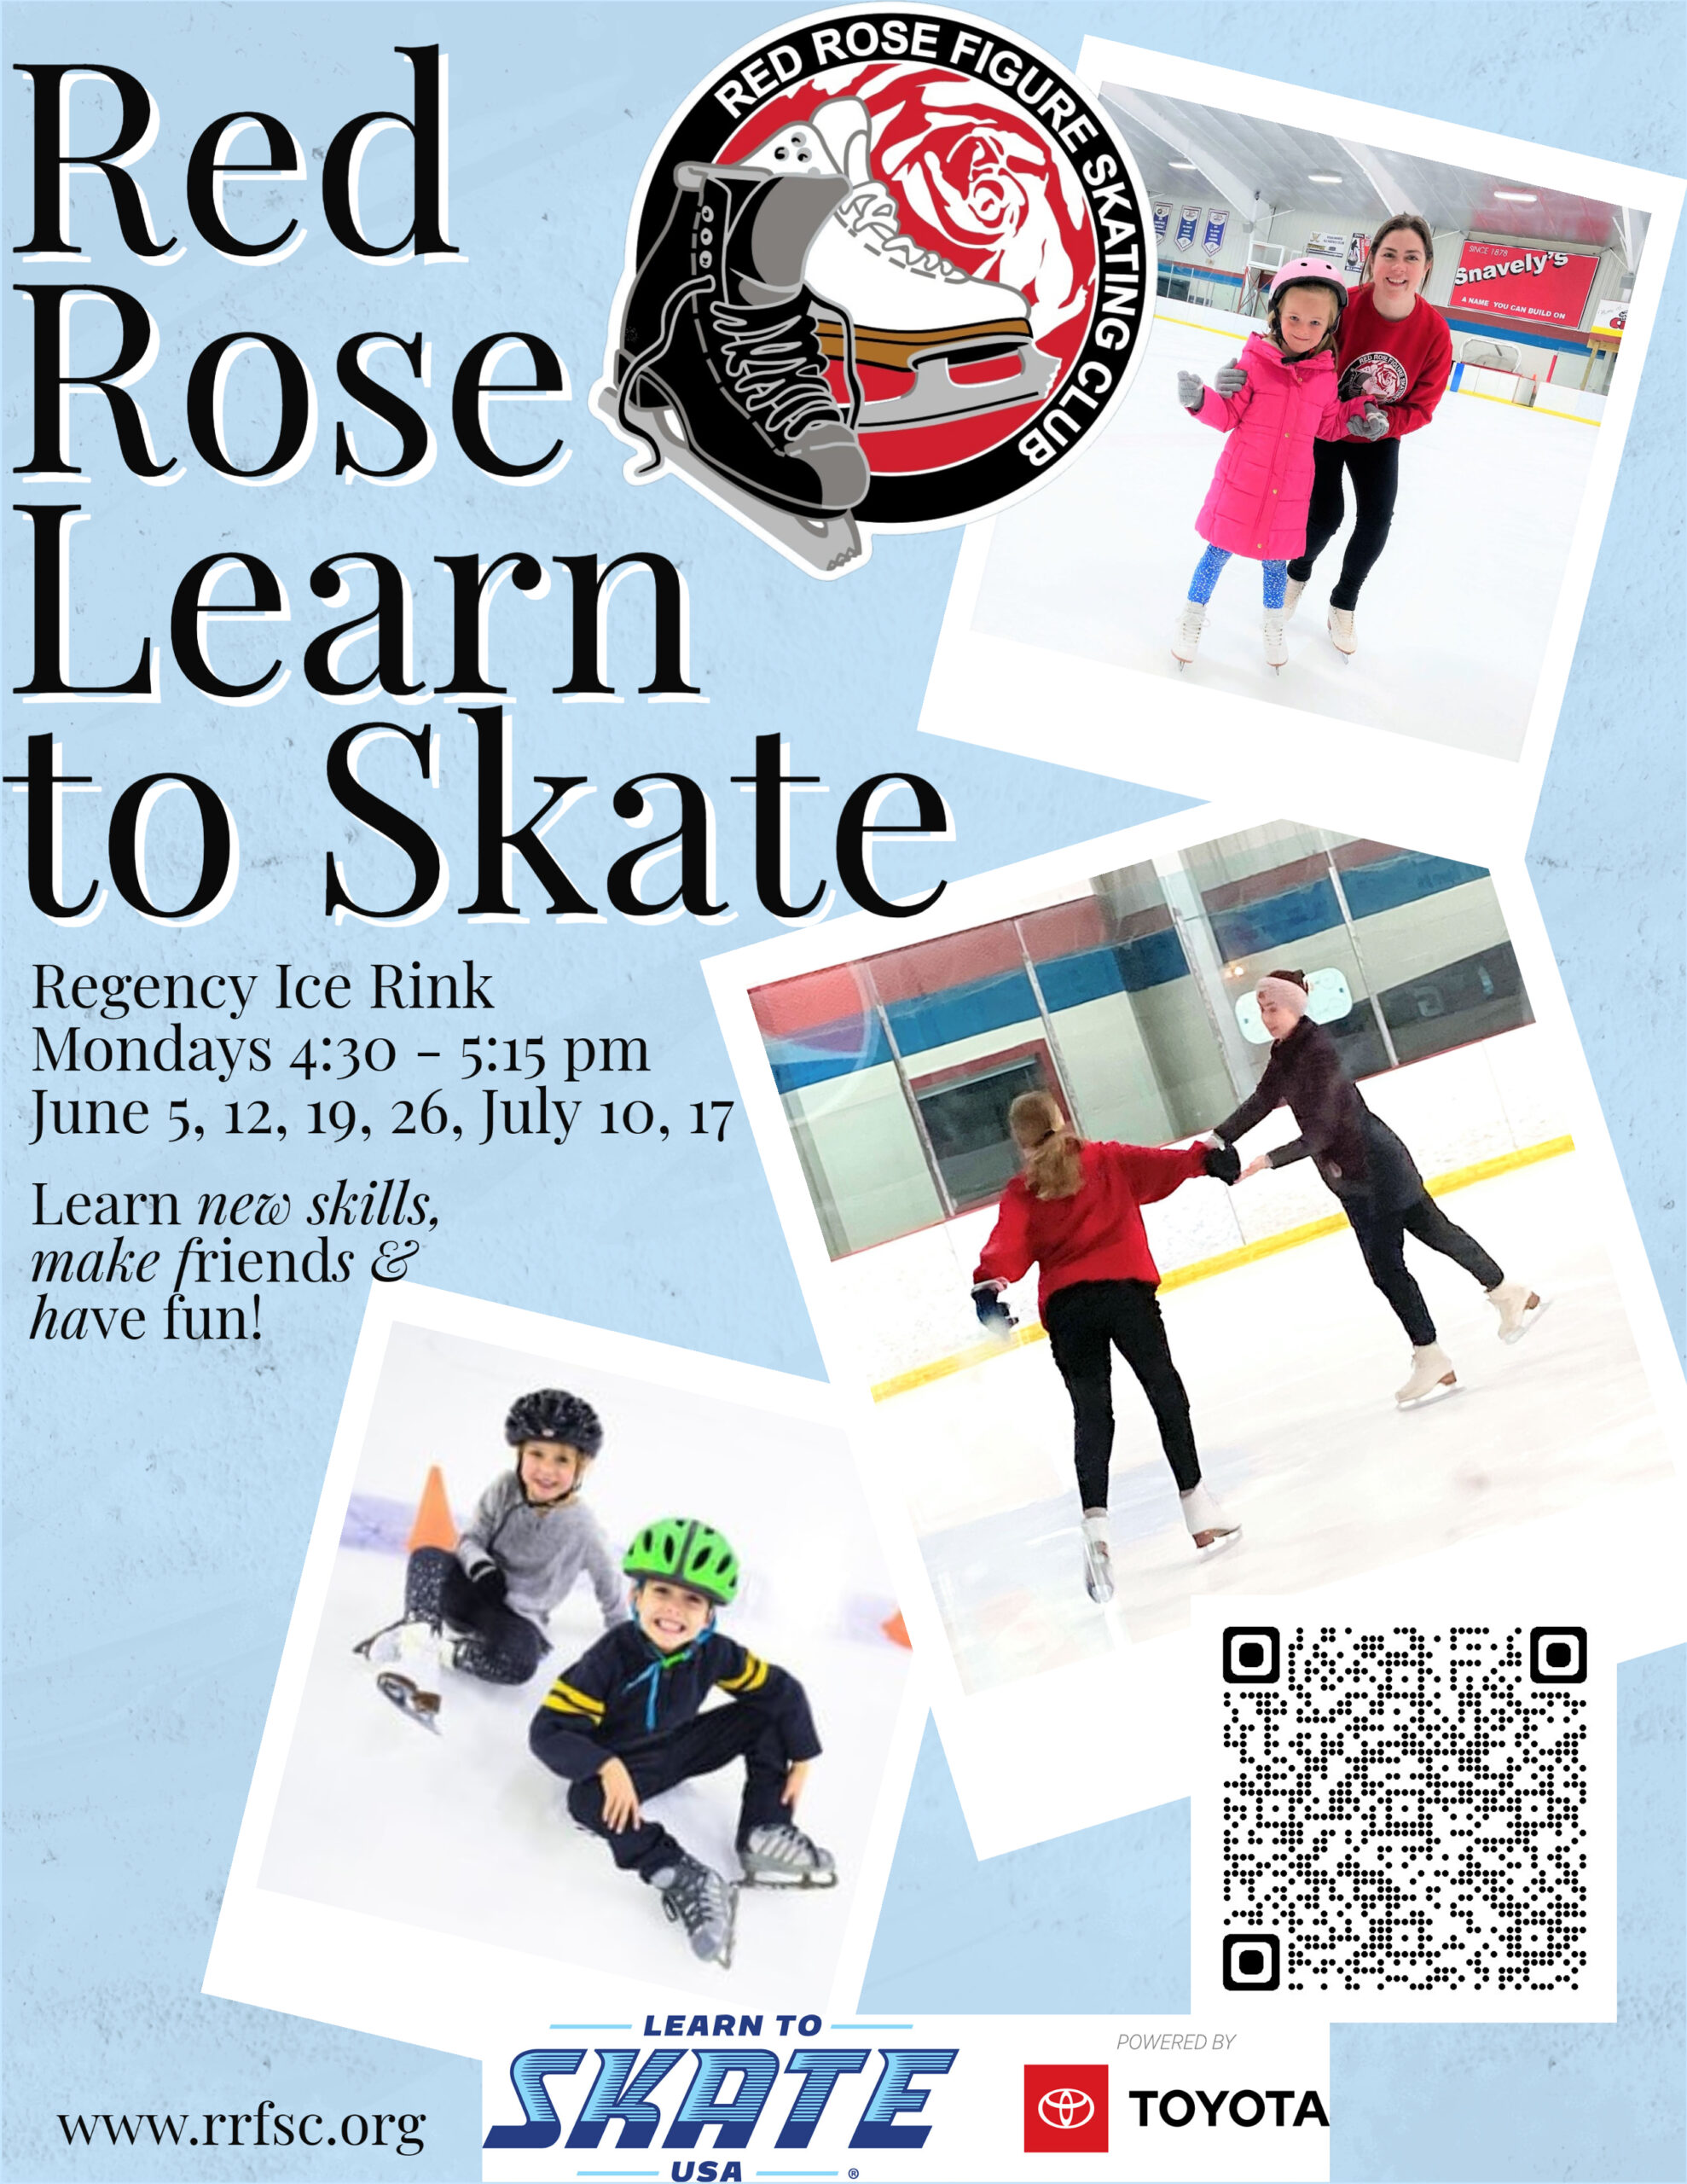 Red Rose Learn-to-Skate USA program at REGENCY ICE RINK